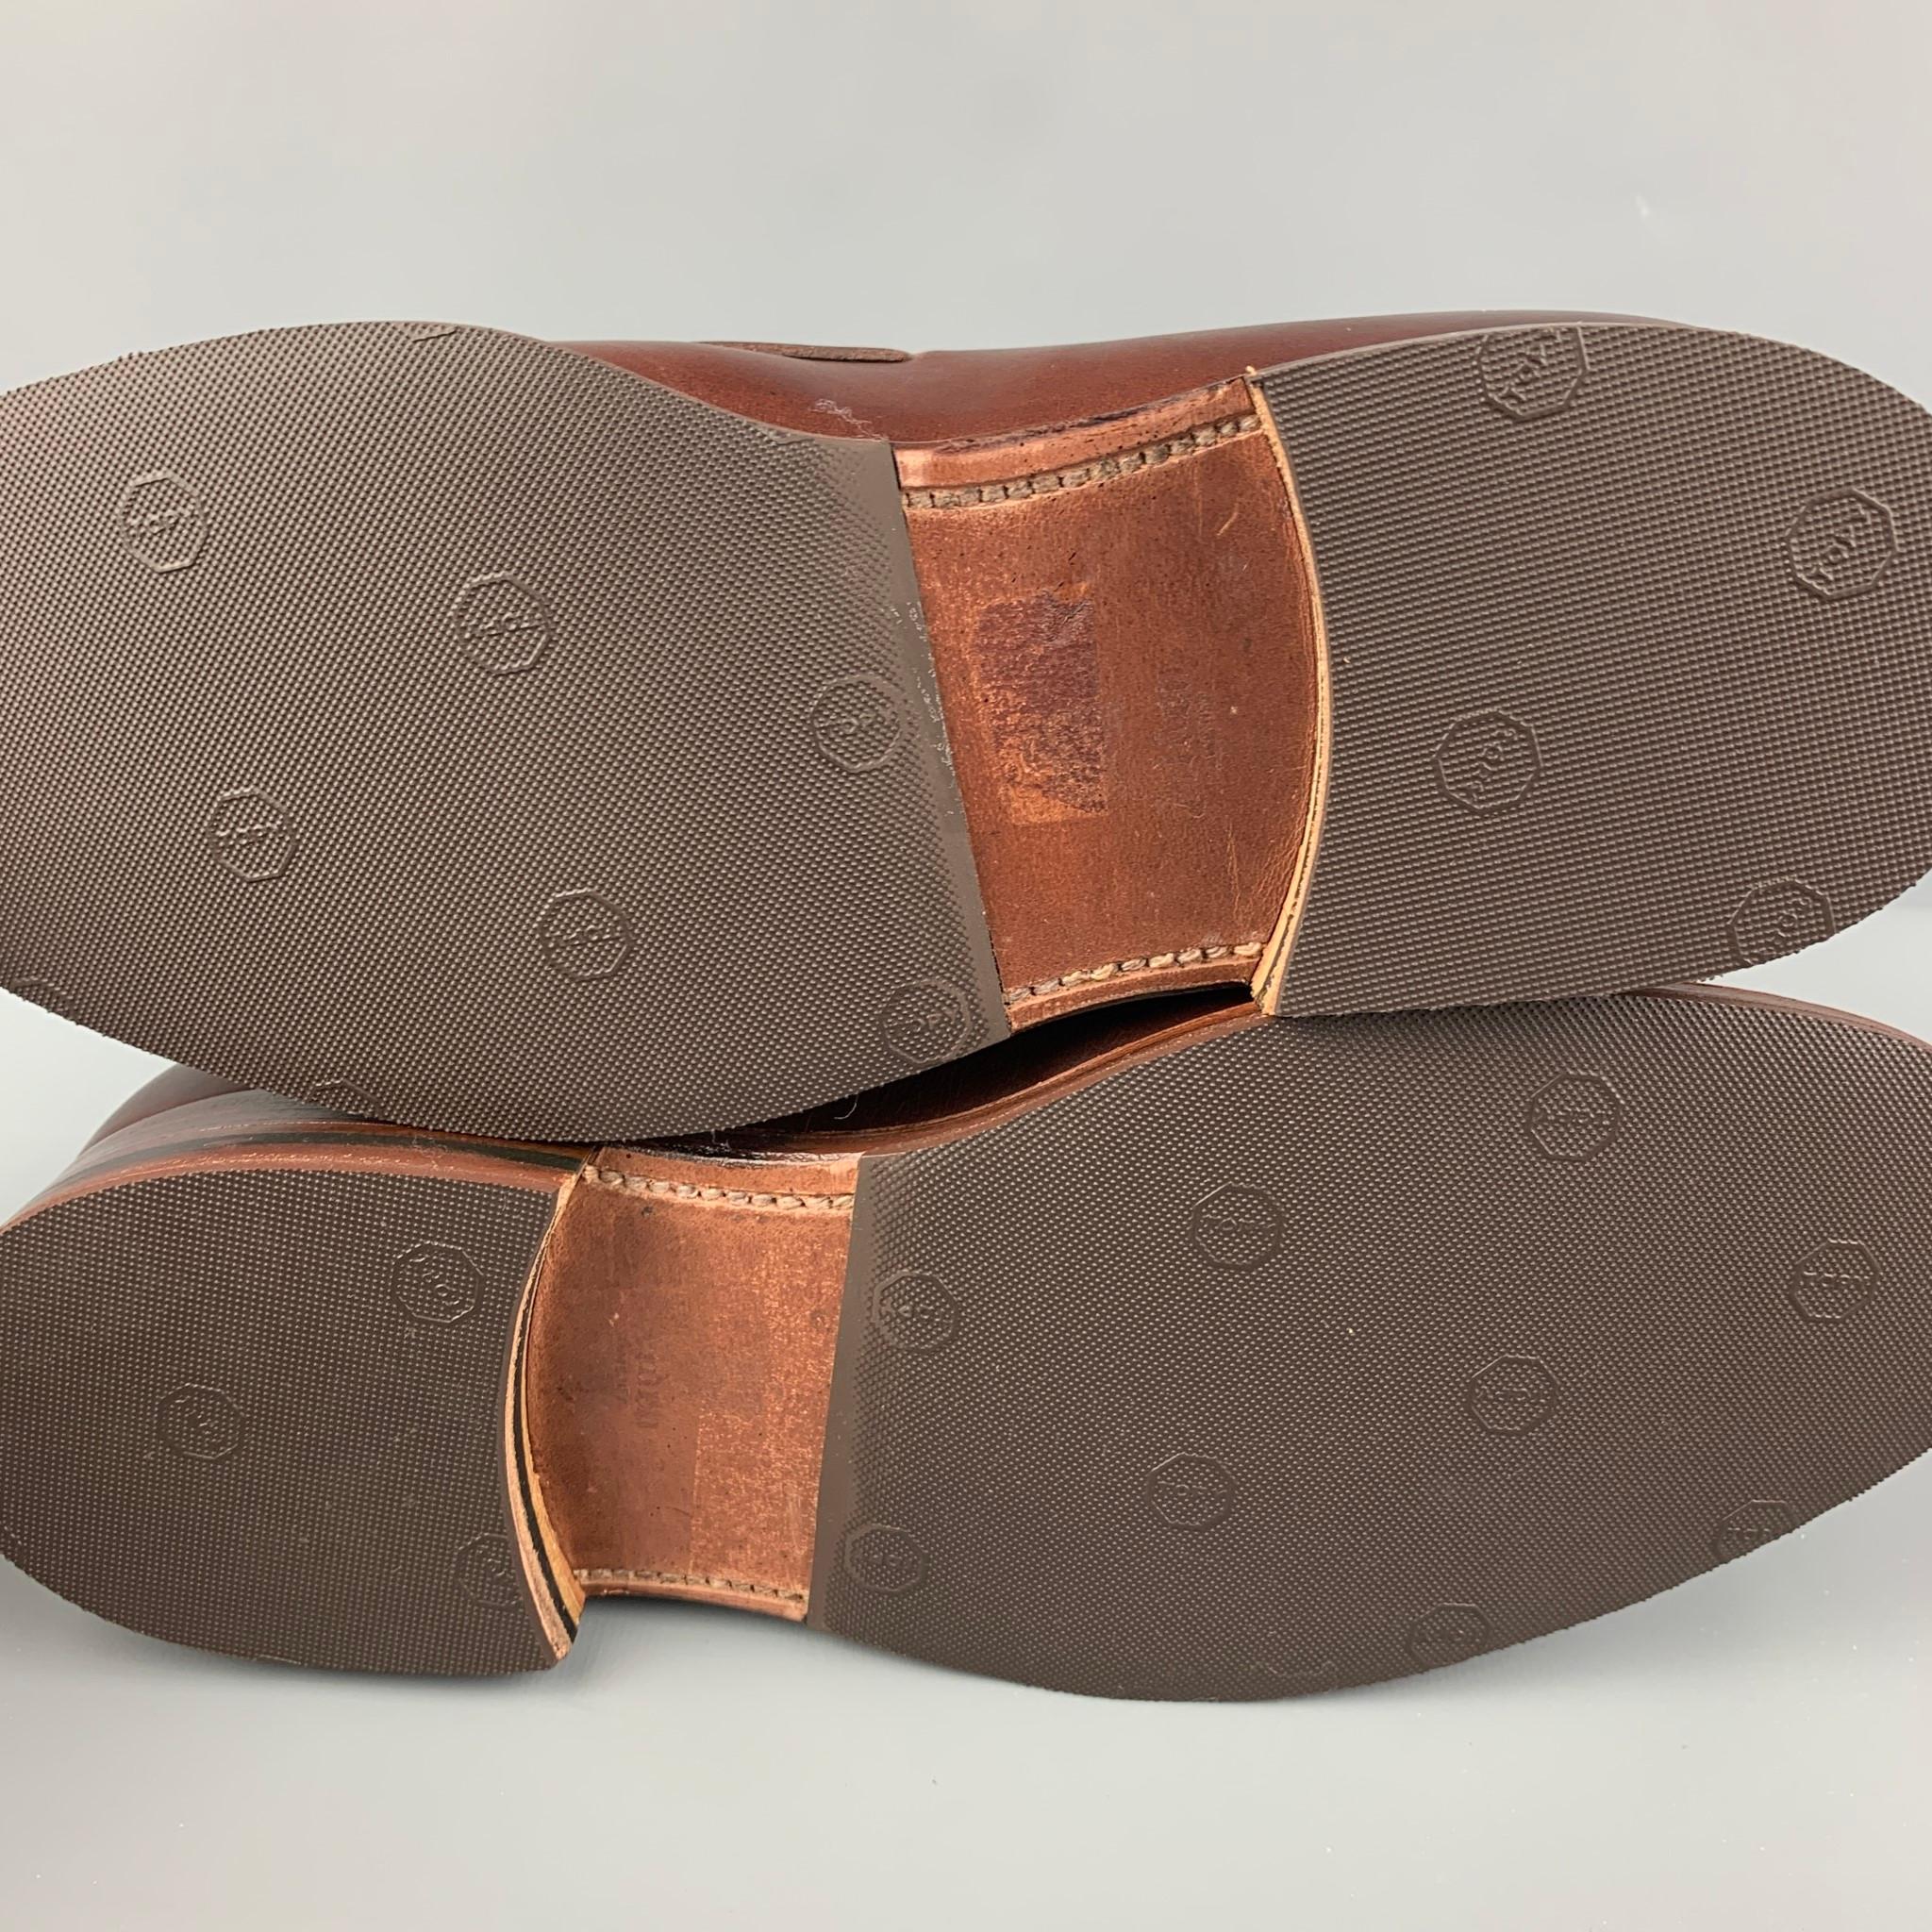 ALDEN Bootmaker Edition Size 7 Brown Leather Tassels Loafers 5